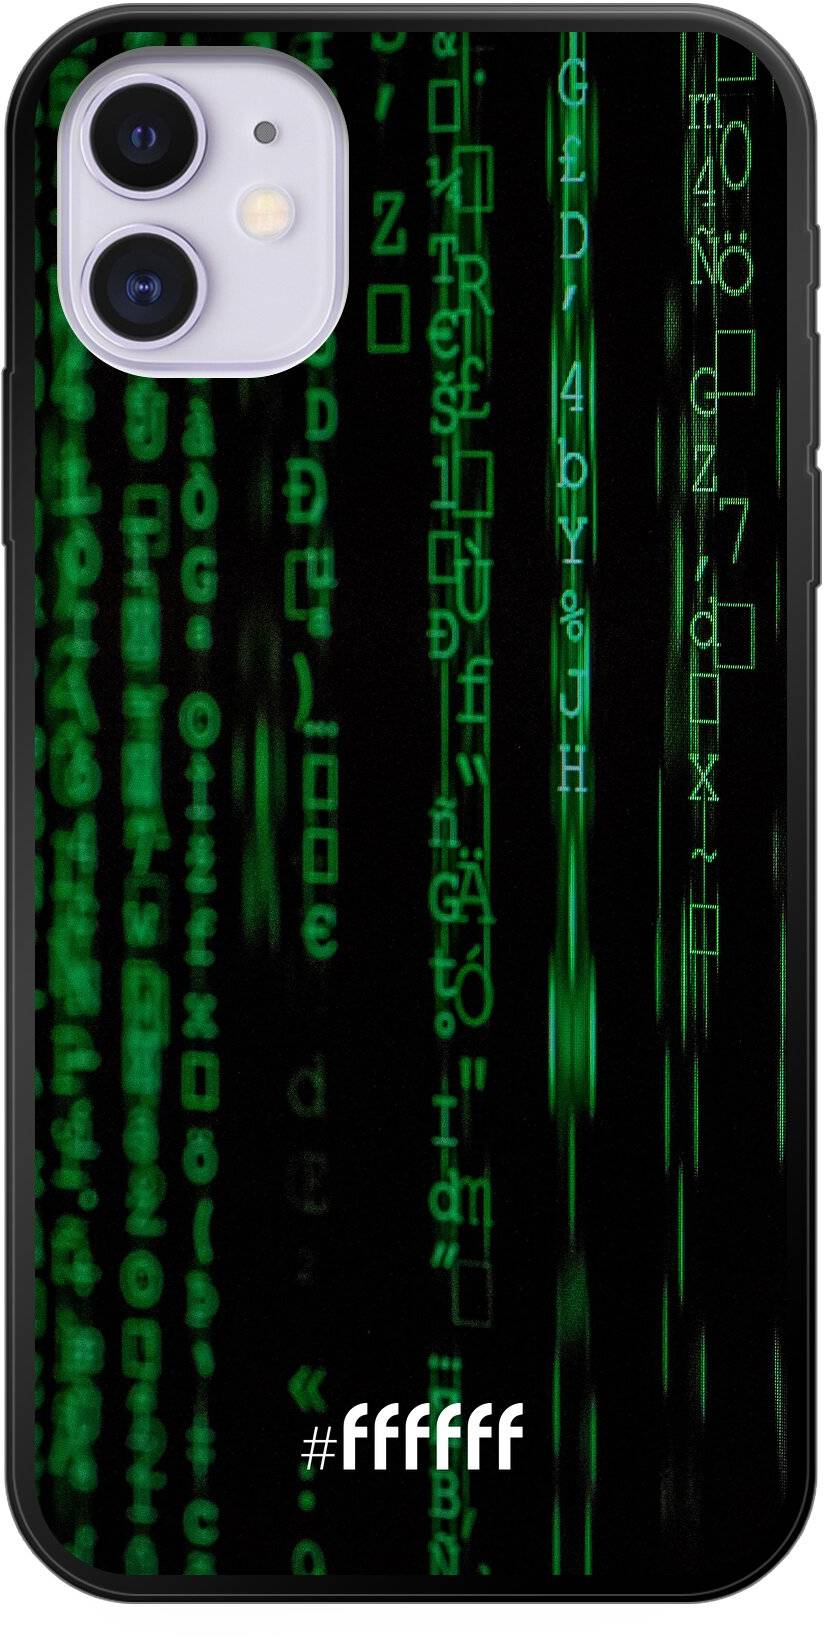 Hacking The Matrix iPhone 11